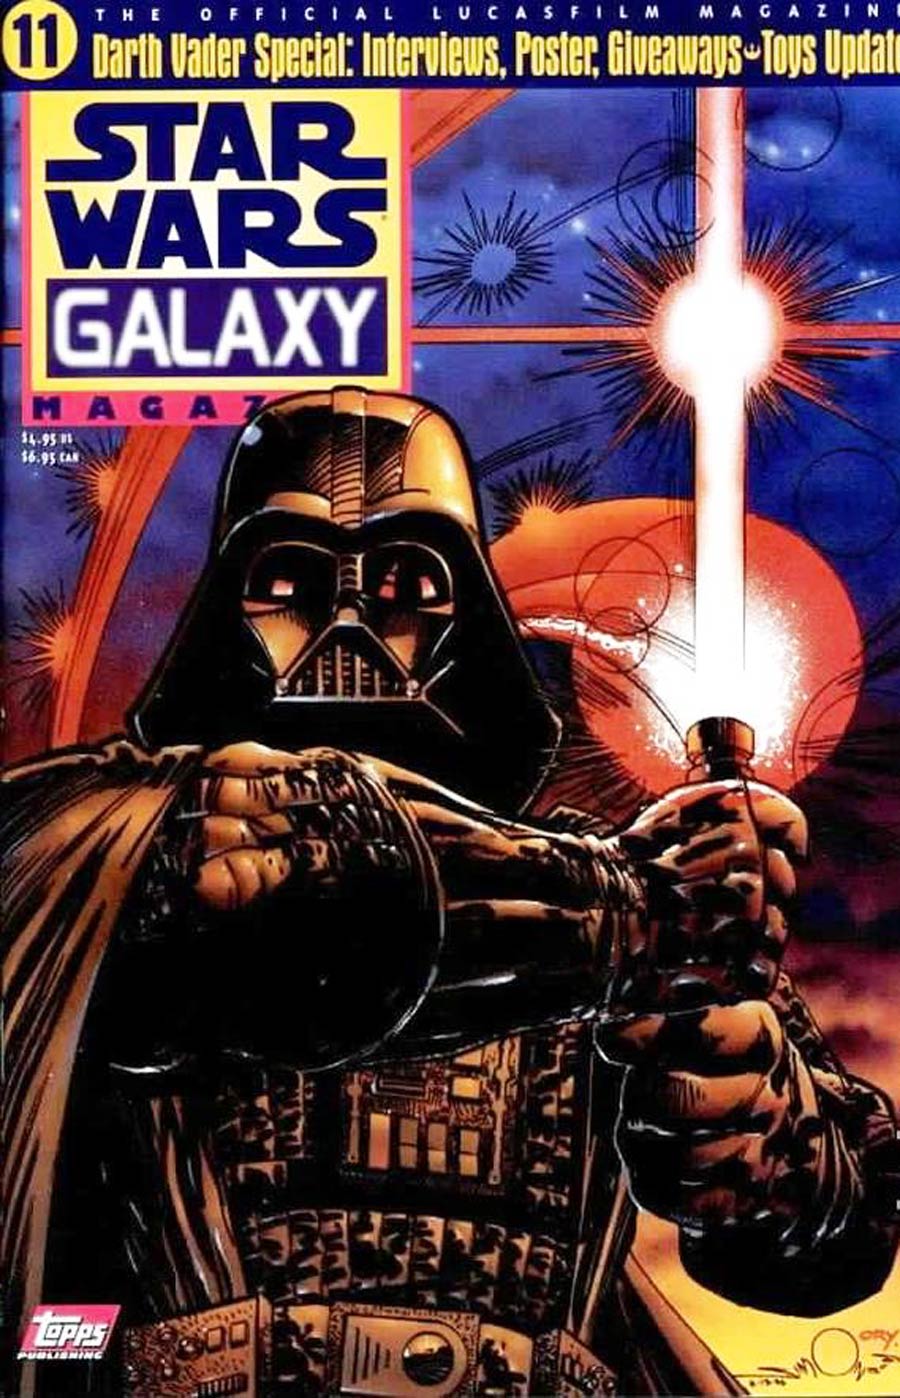 Star Wars Galaxy Magazine #11 Cover B No Polybag